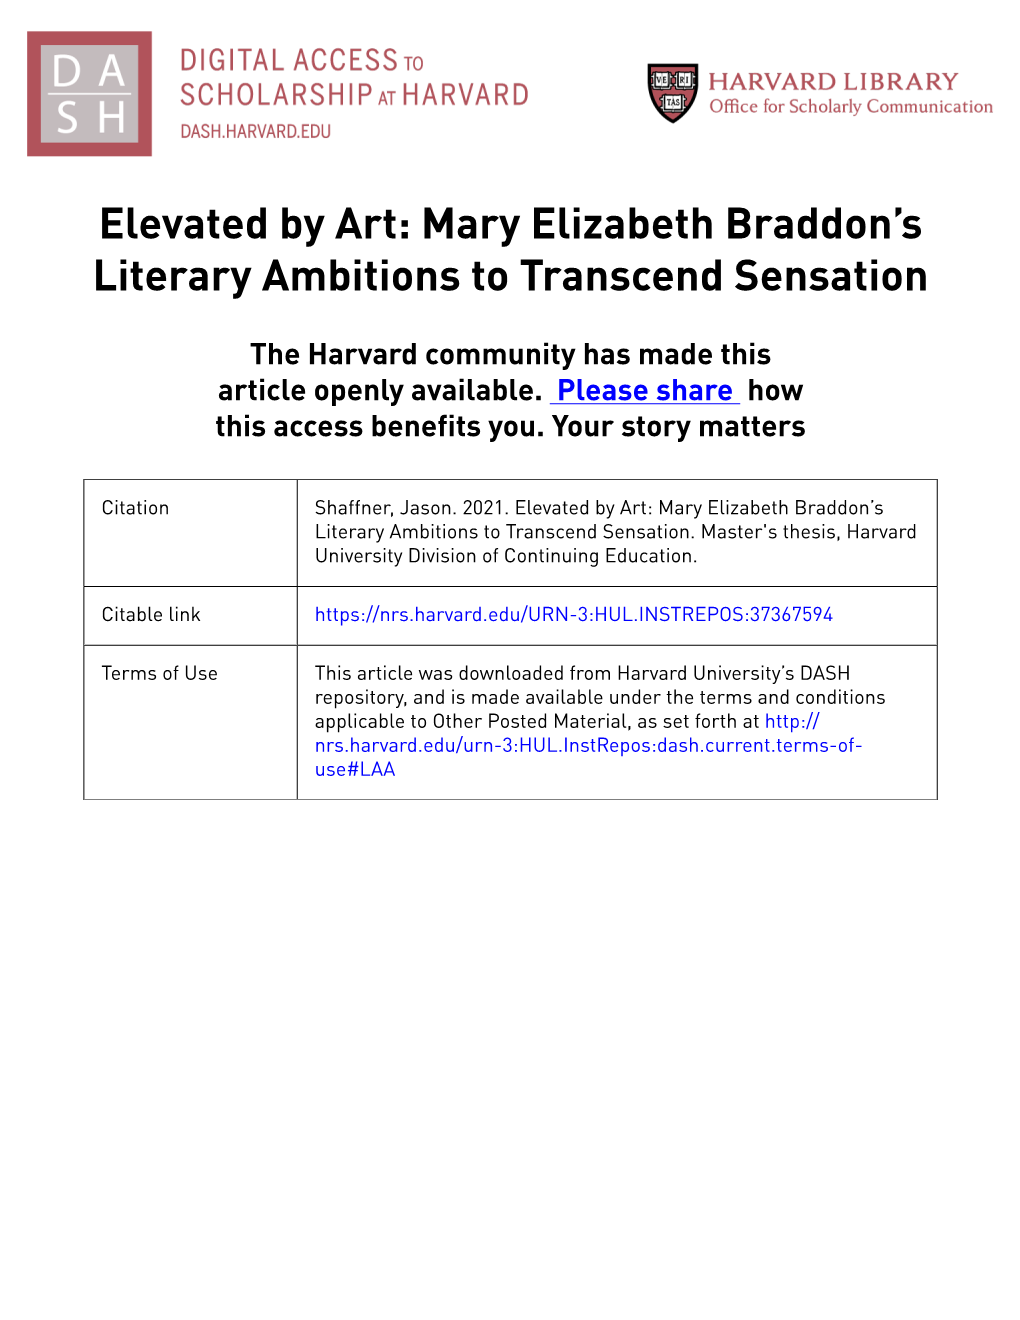 Mary Elizabeth Braddon's Literary Ambitions To